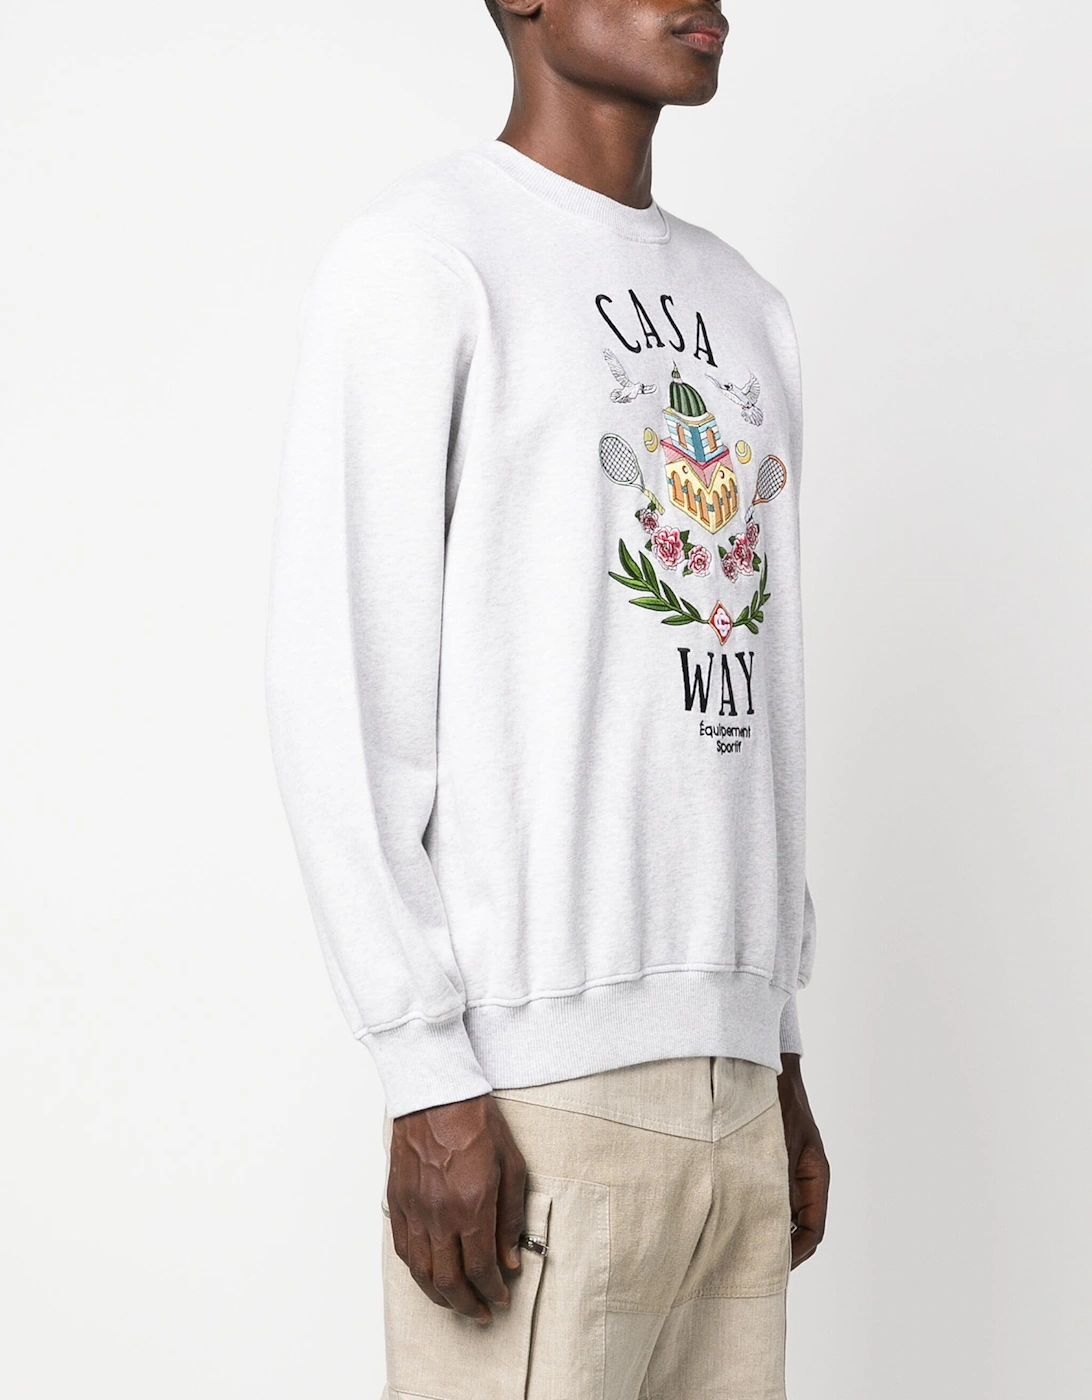 Casa way Embroidered Sweatshirt in Grey